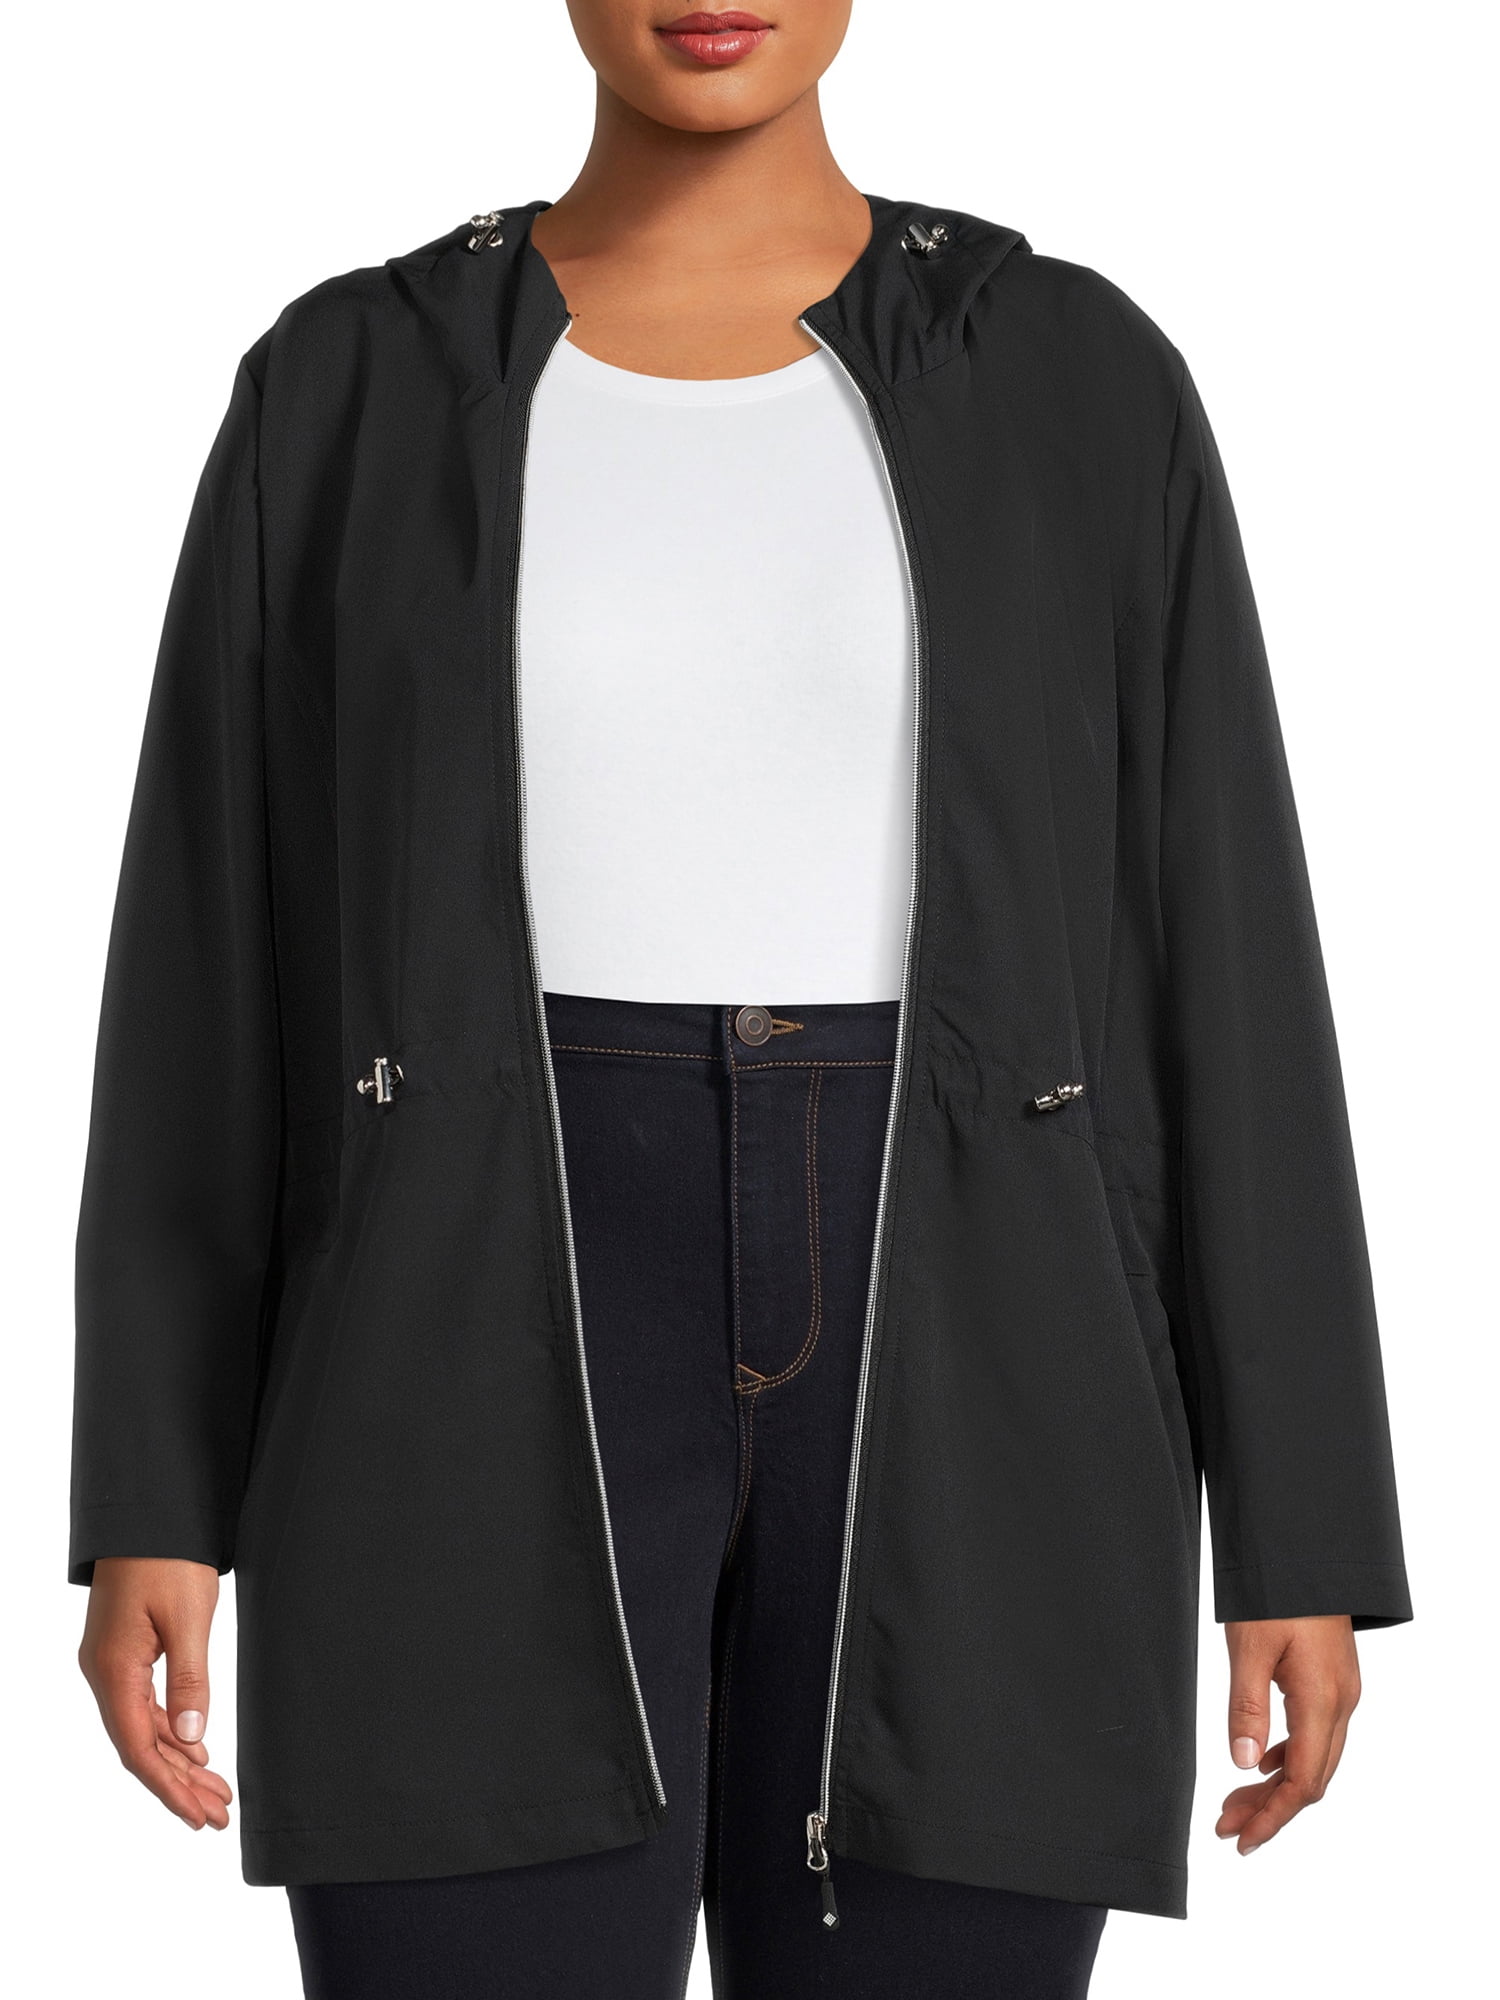 Big Chill Women's Plus Size Anorak Rain Jacket with Hood - Walmart.com